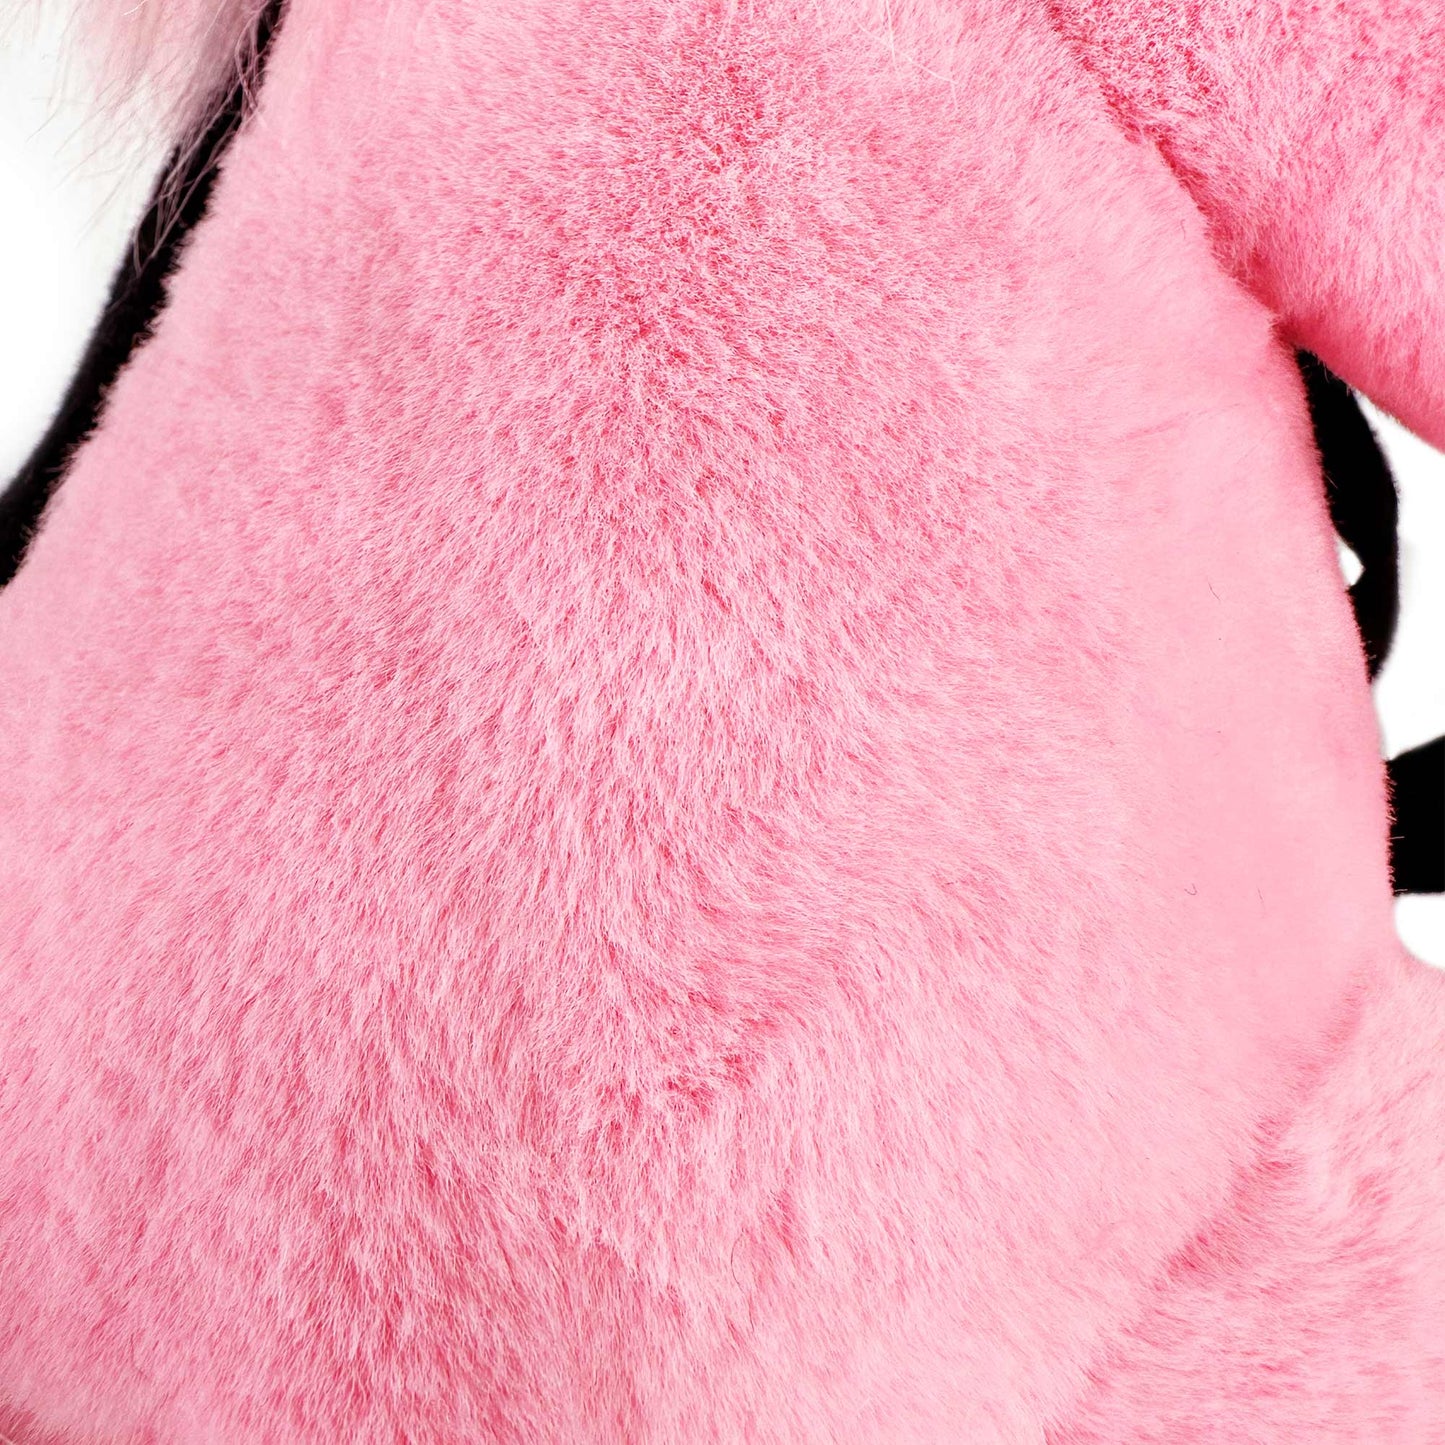 pink fur detail raccoon Stuffed animal PlushThis